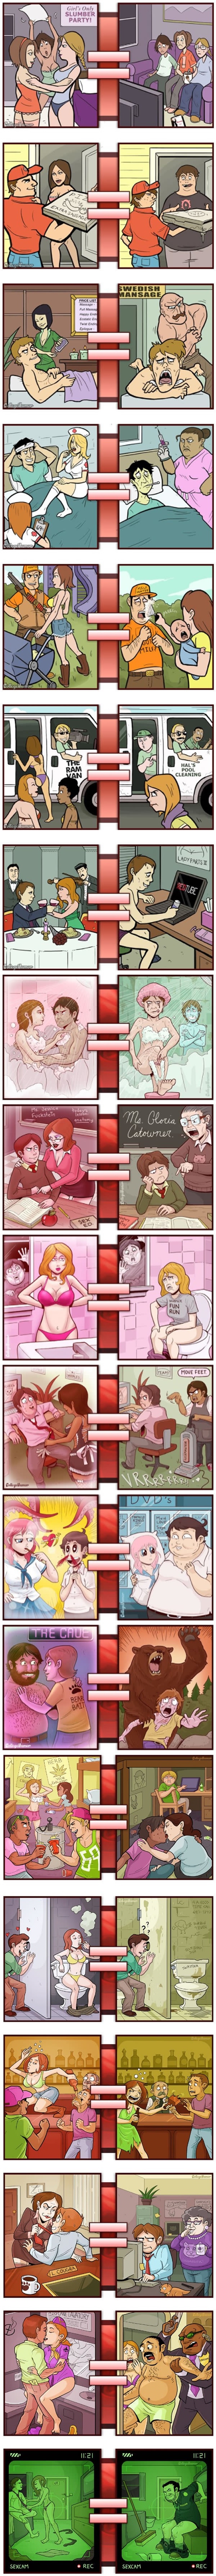 Sexulne fantzie vs realita  